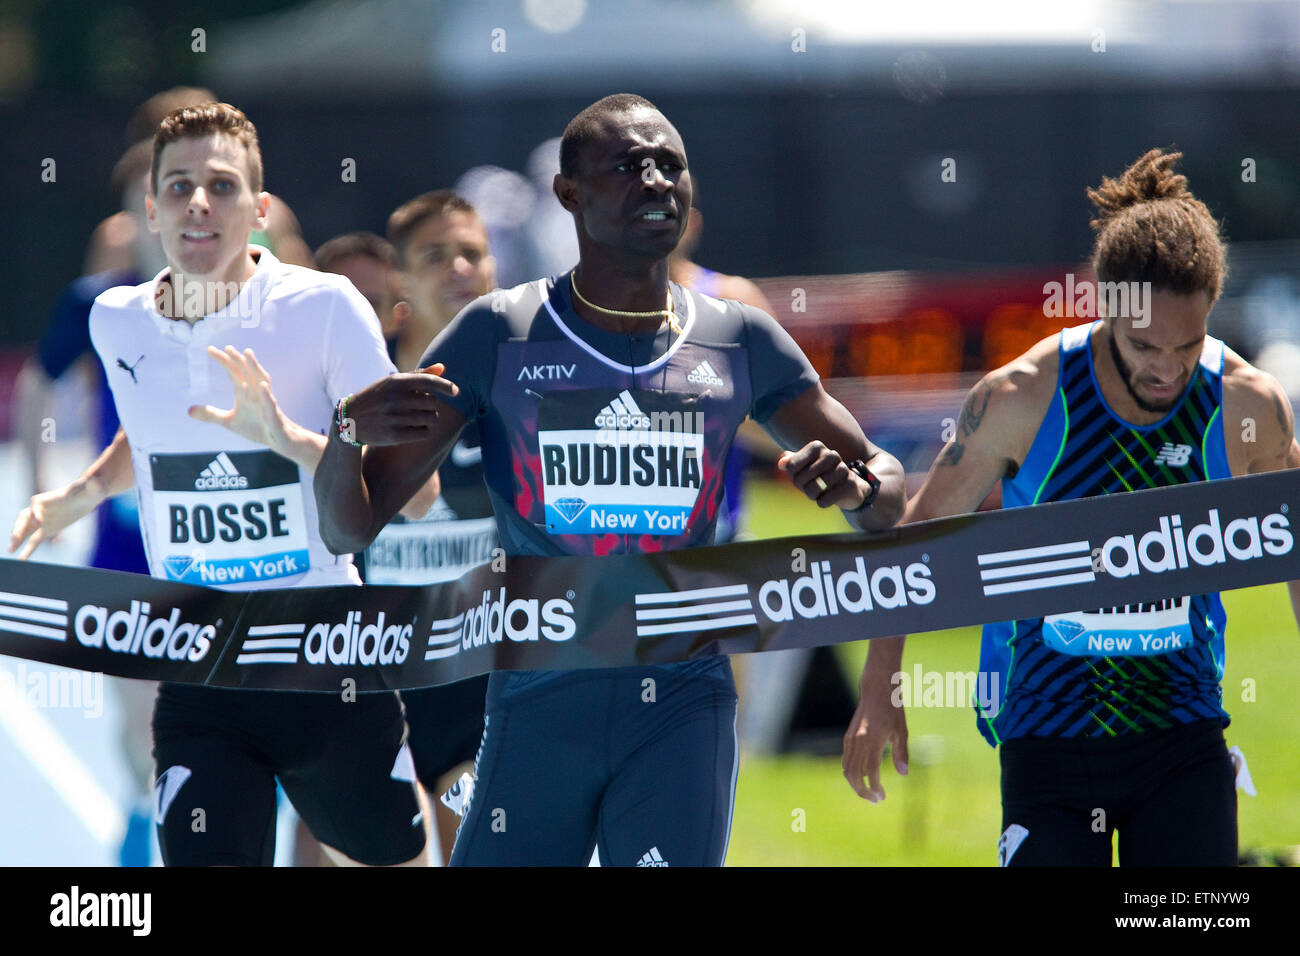 13 juin, 2015 ; Randall's Island, NY, USA ; David Rudisha de Kenya remporte le 800m hommes au cours de l'IAAF Diamond League Adidas Grand Prix à Icahn Stadium. Anthony Nesmith/Cal Sport Media Banque D'Images